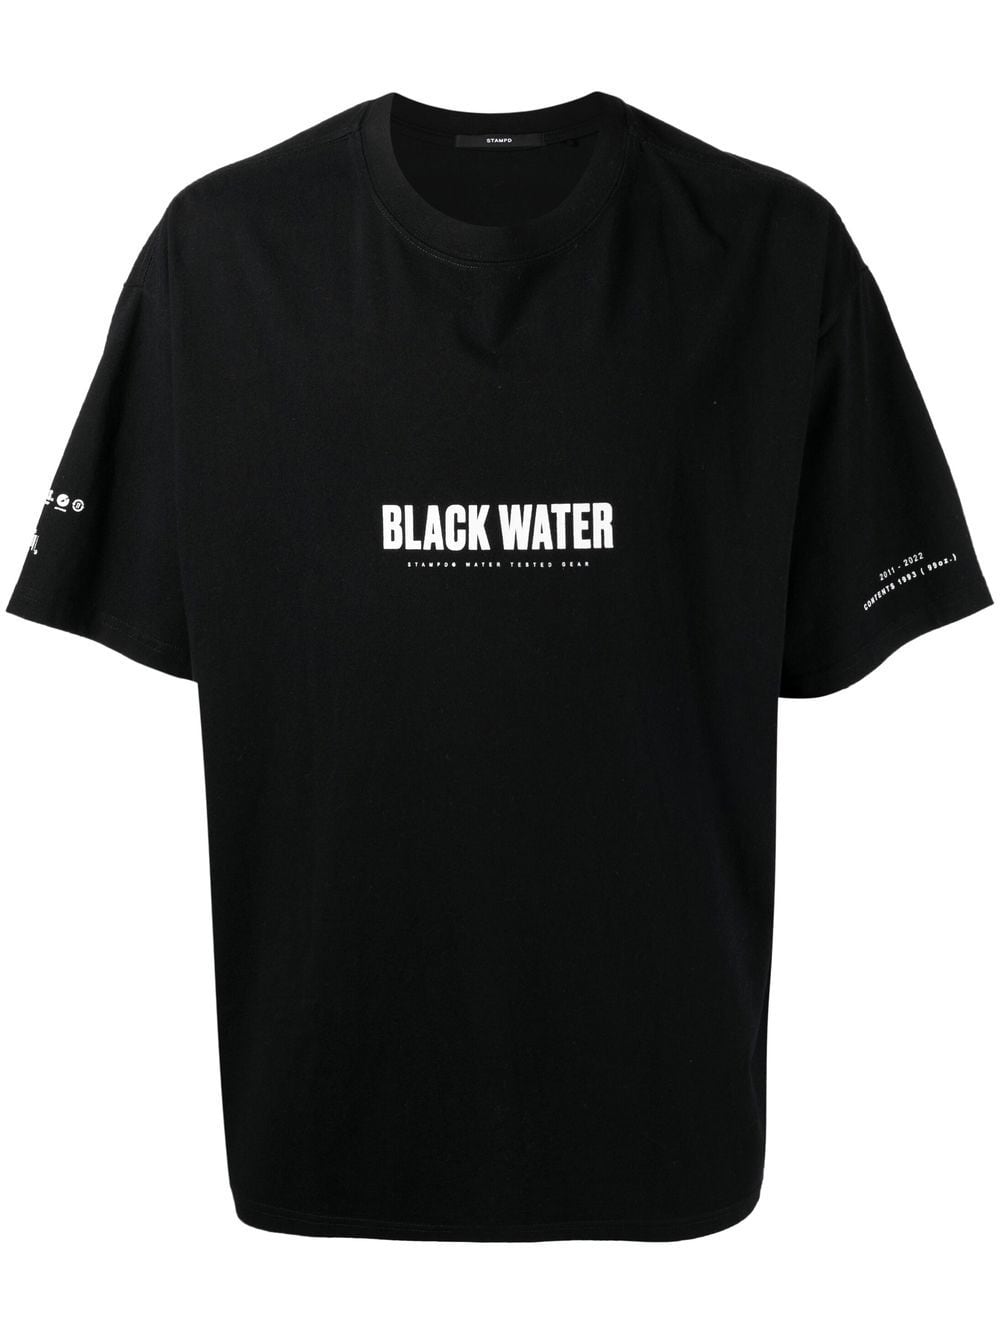 Black Water cotton T-shirt